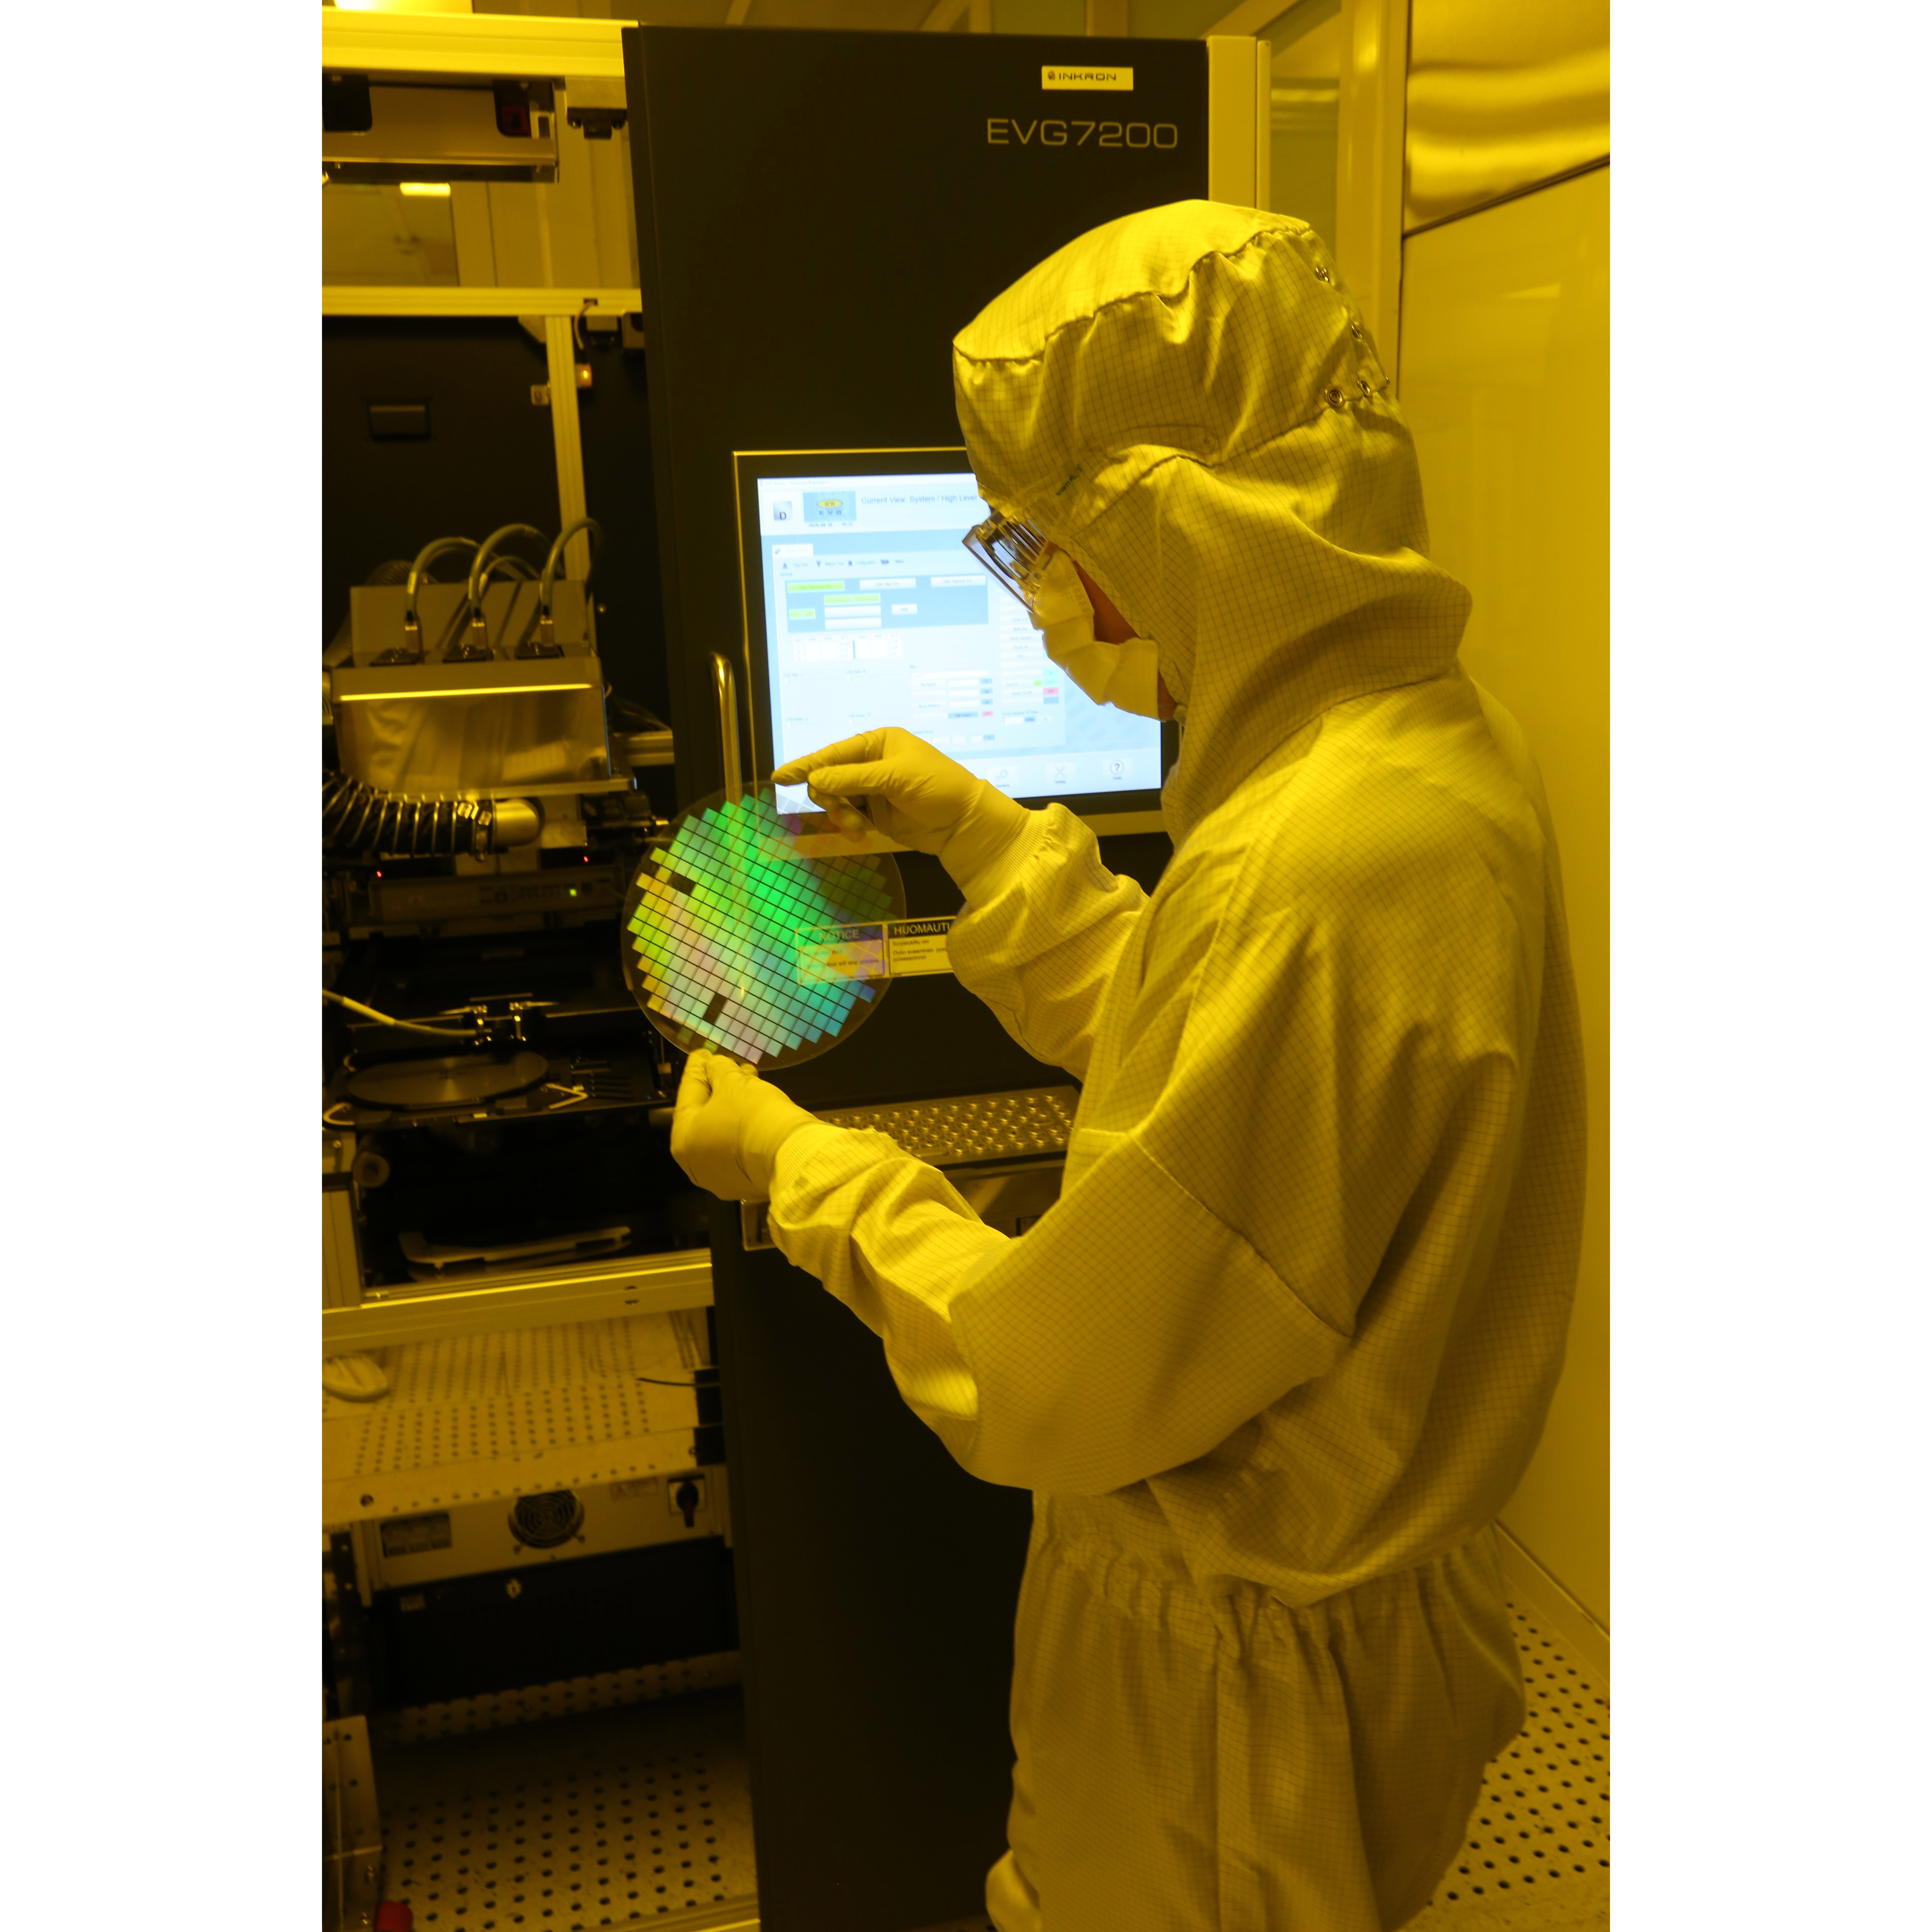 EVG 7200 Automated SmartNIL® UV Nanoimprint Lithography System with operator